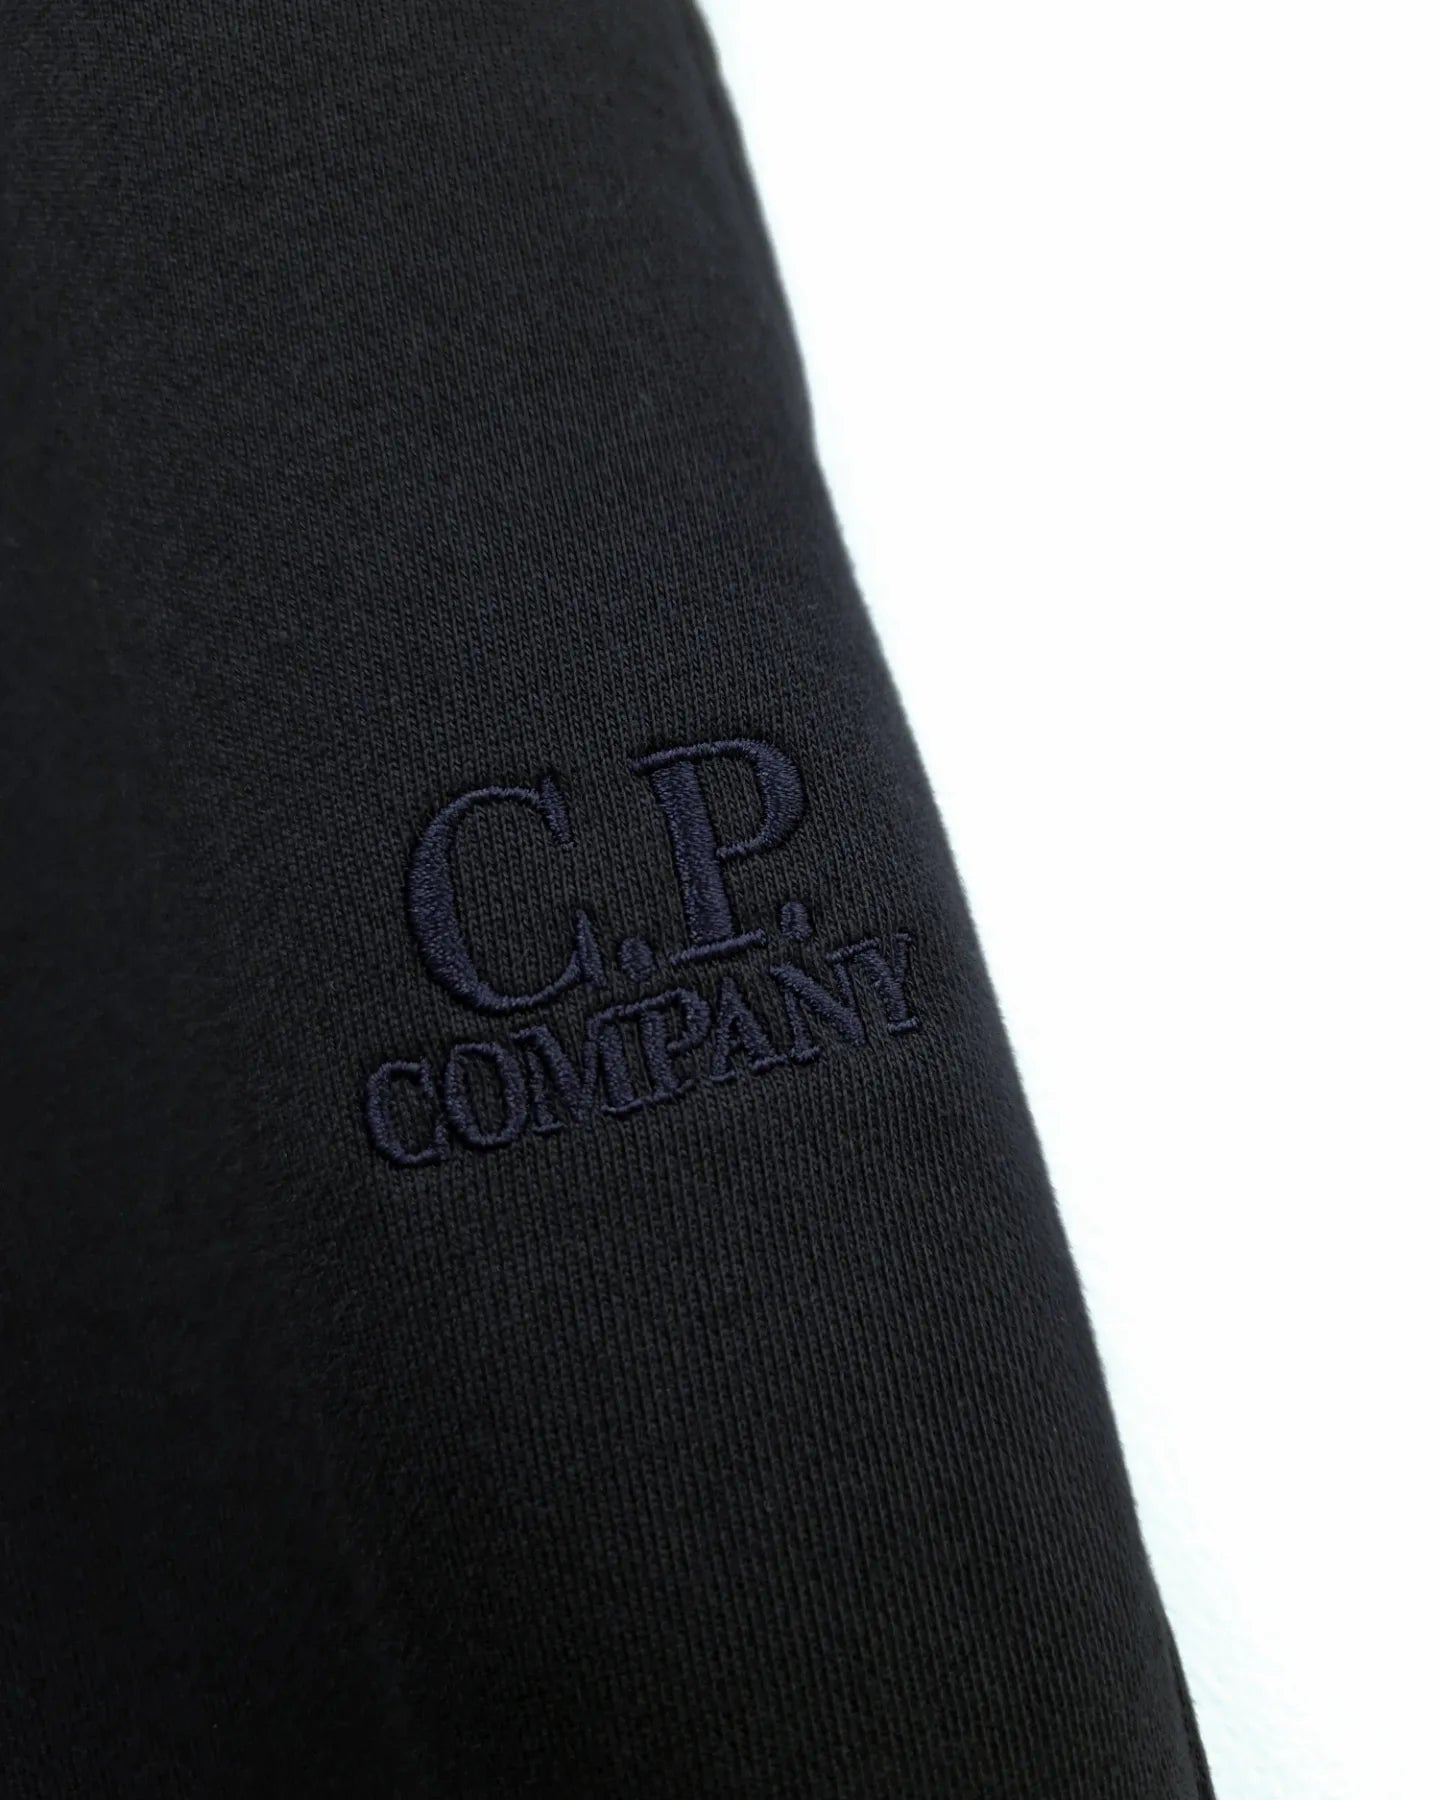 C.P. Company Fleece Jogging Shorts - Navy Blue